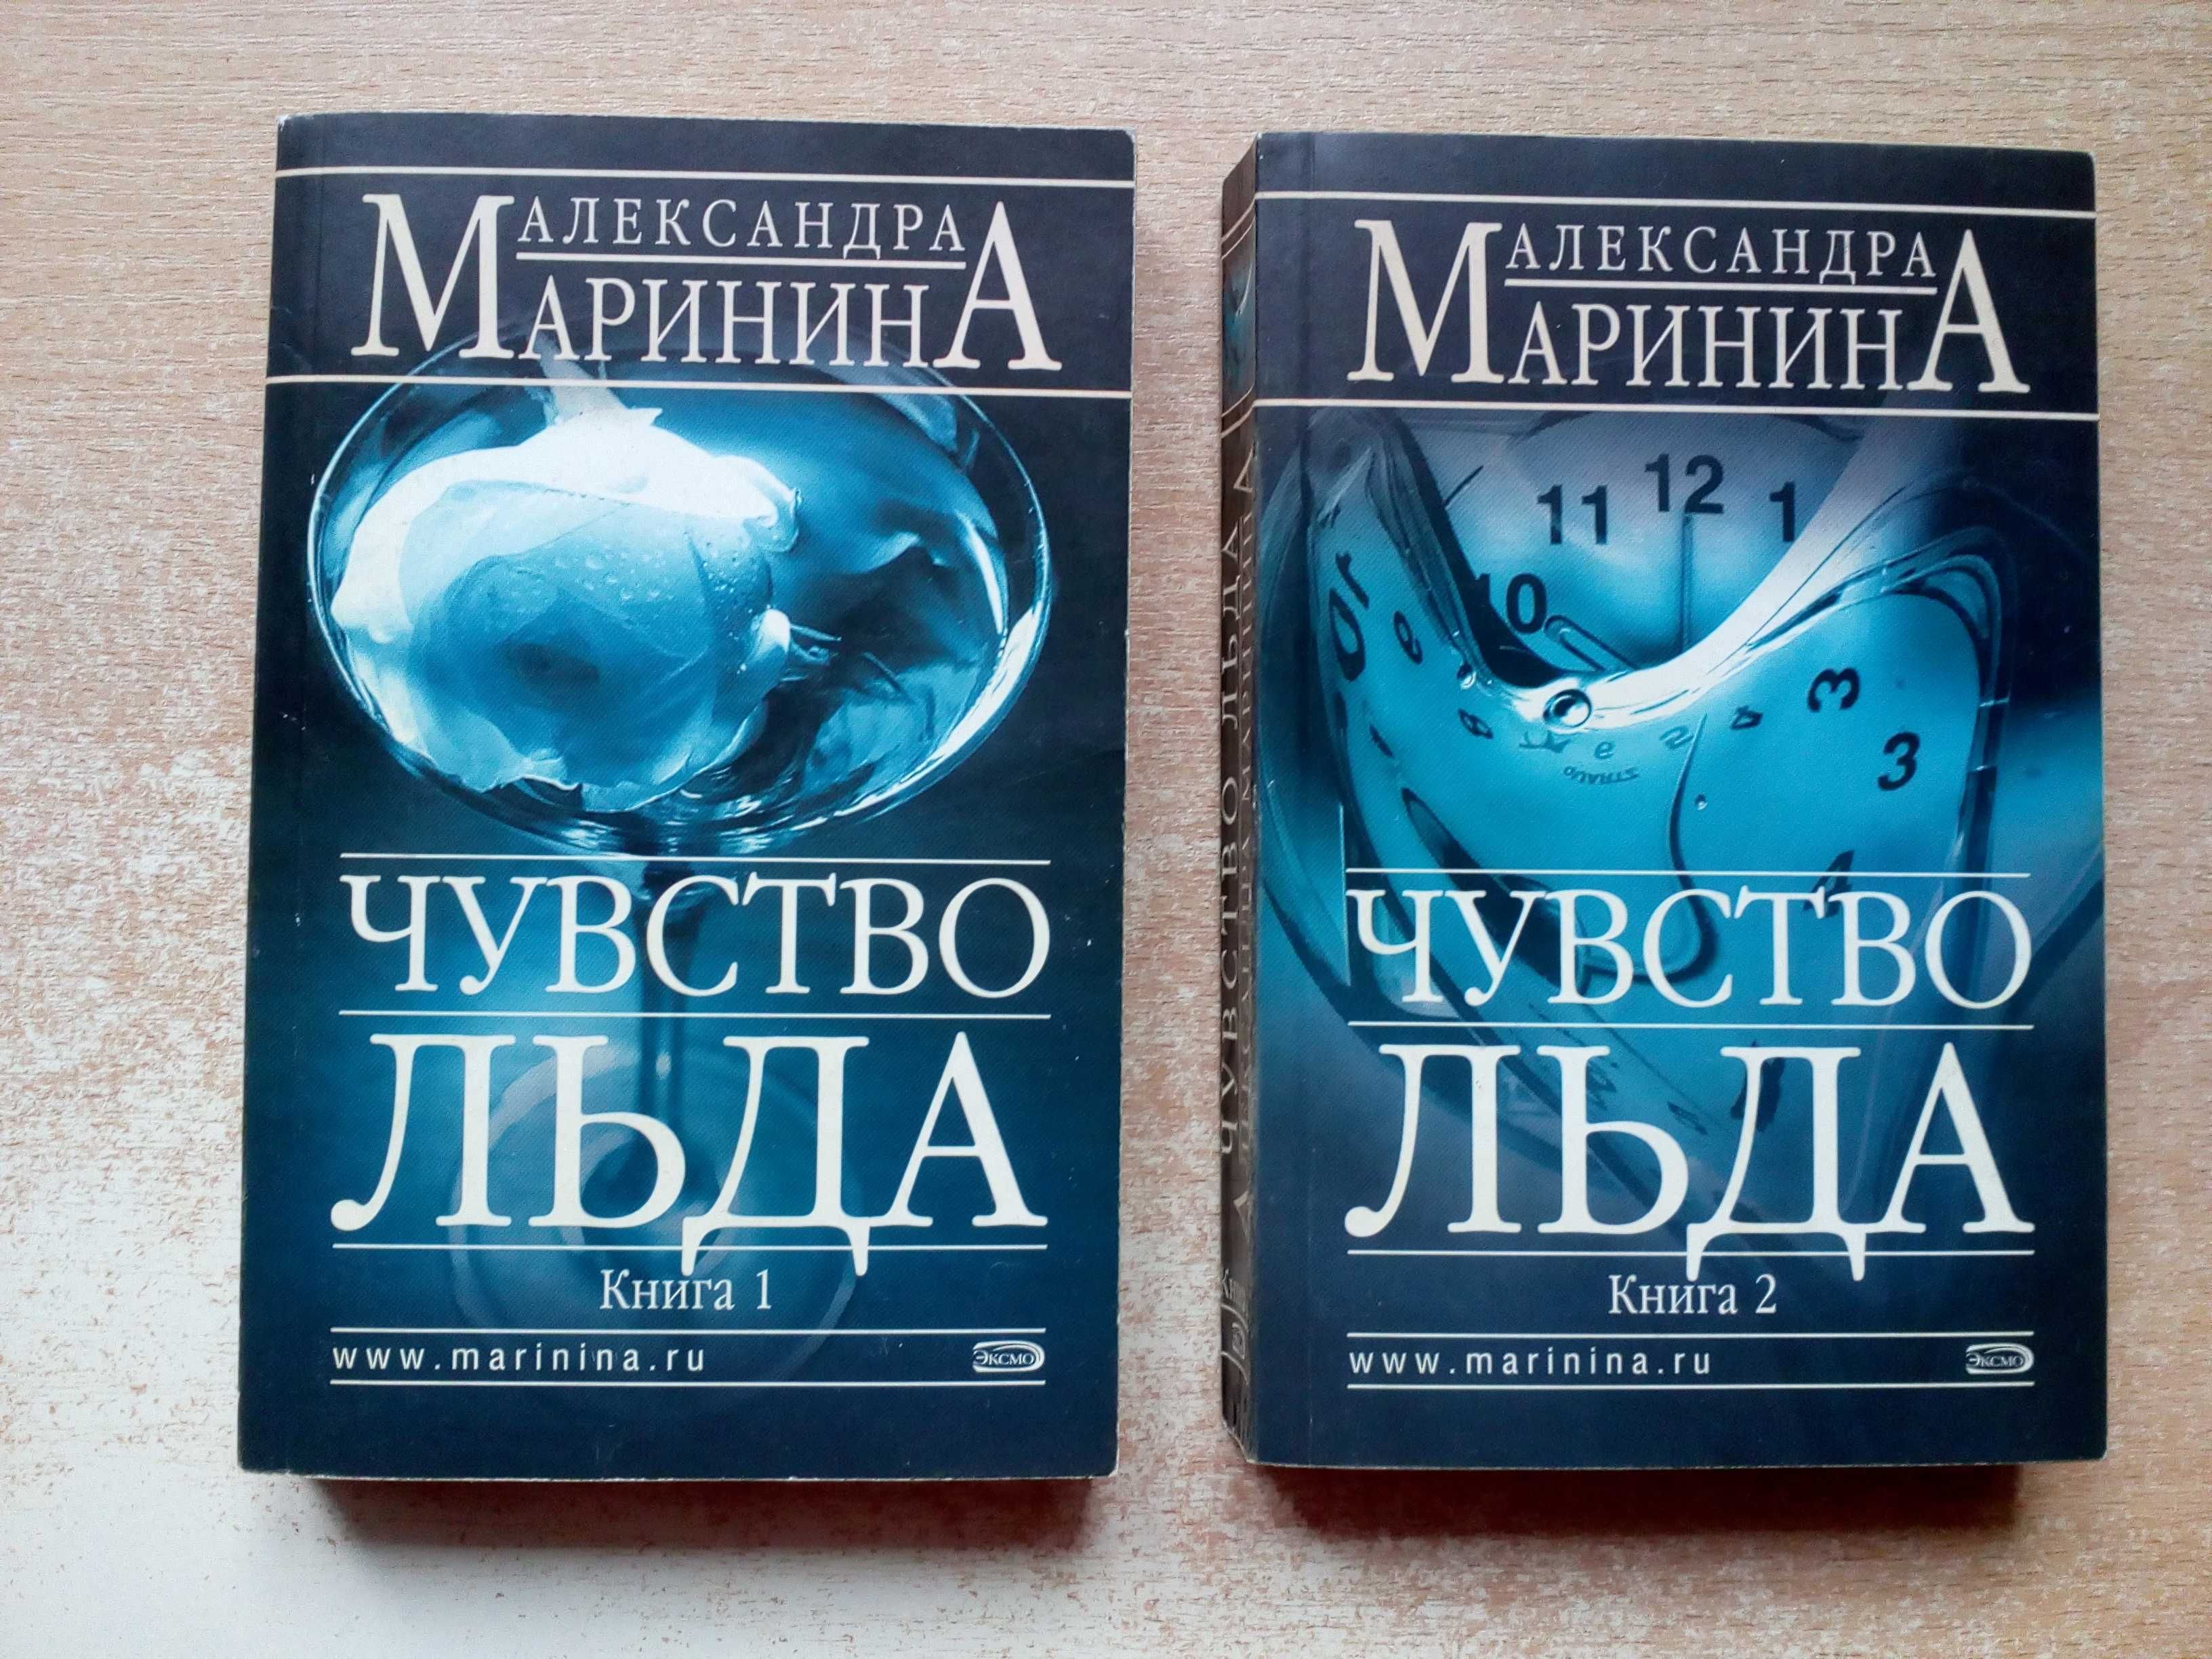 Маринина,6 книг(5 произведений).